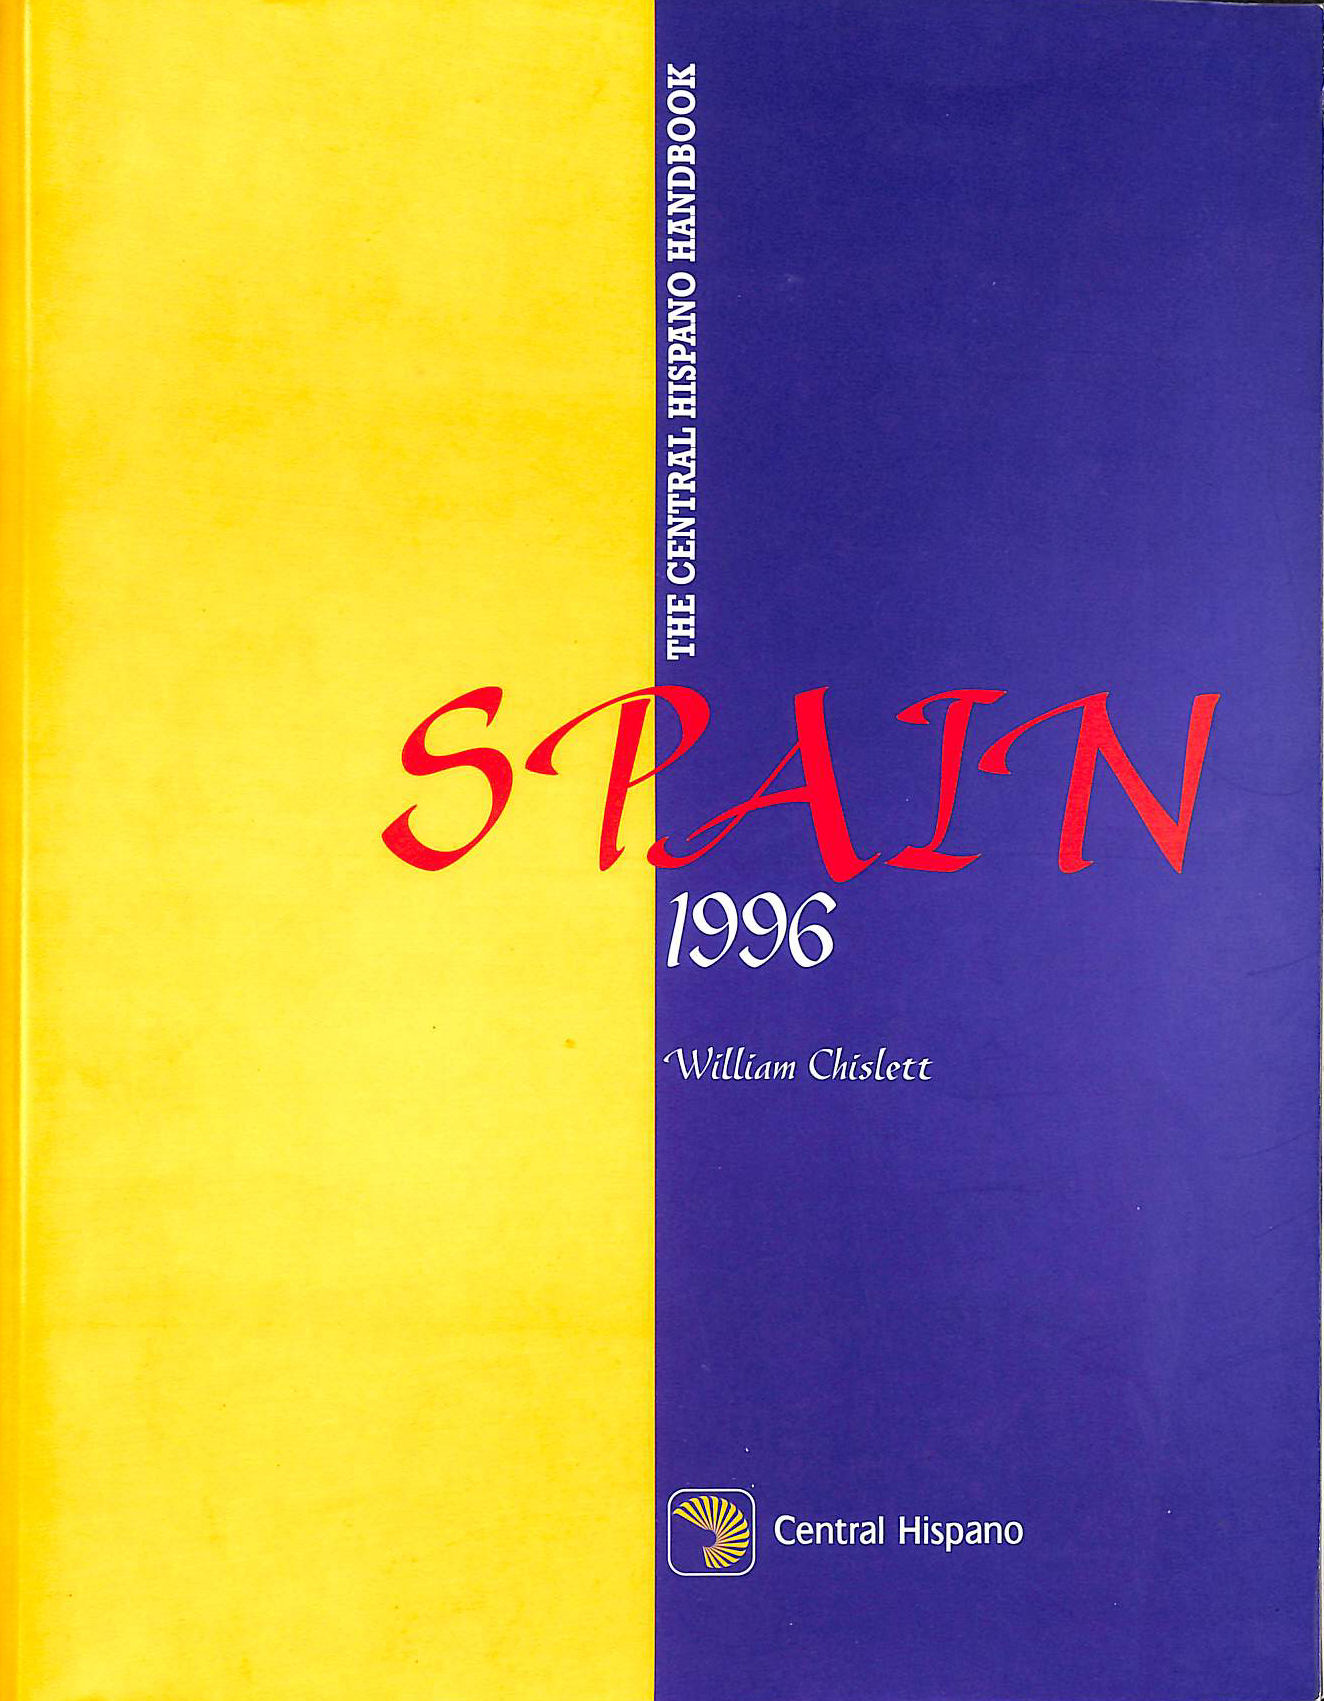 CHISLETT, WILLIAM - The Central Hispano Handbook, Spain 1996